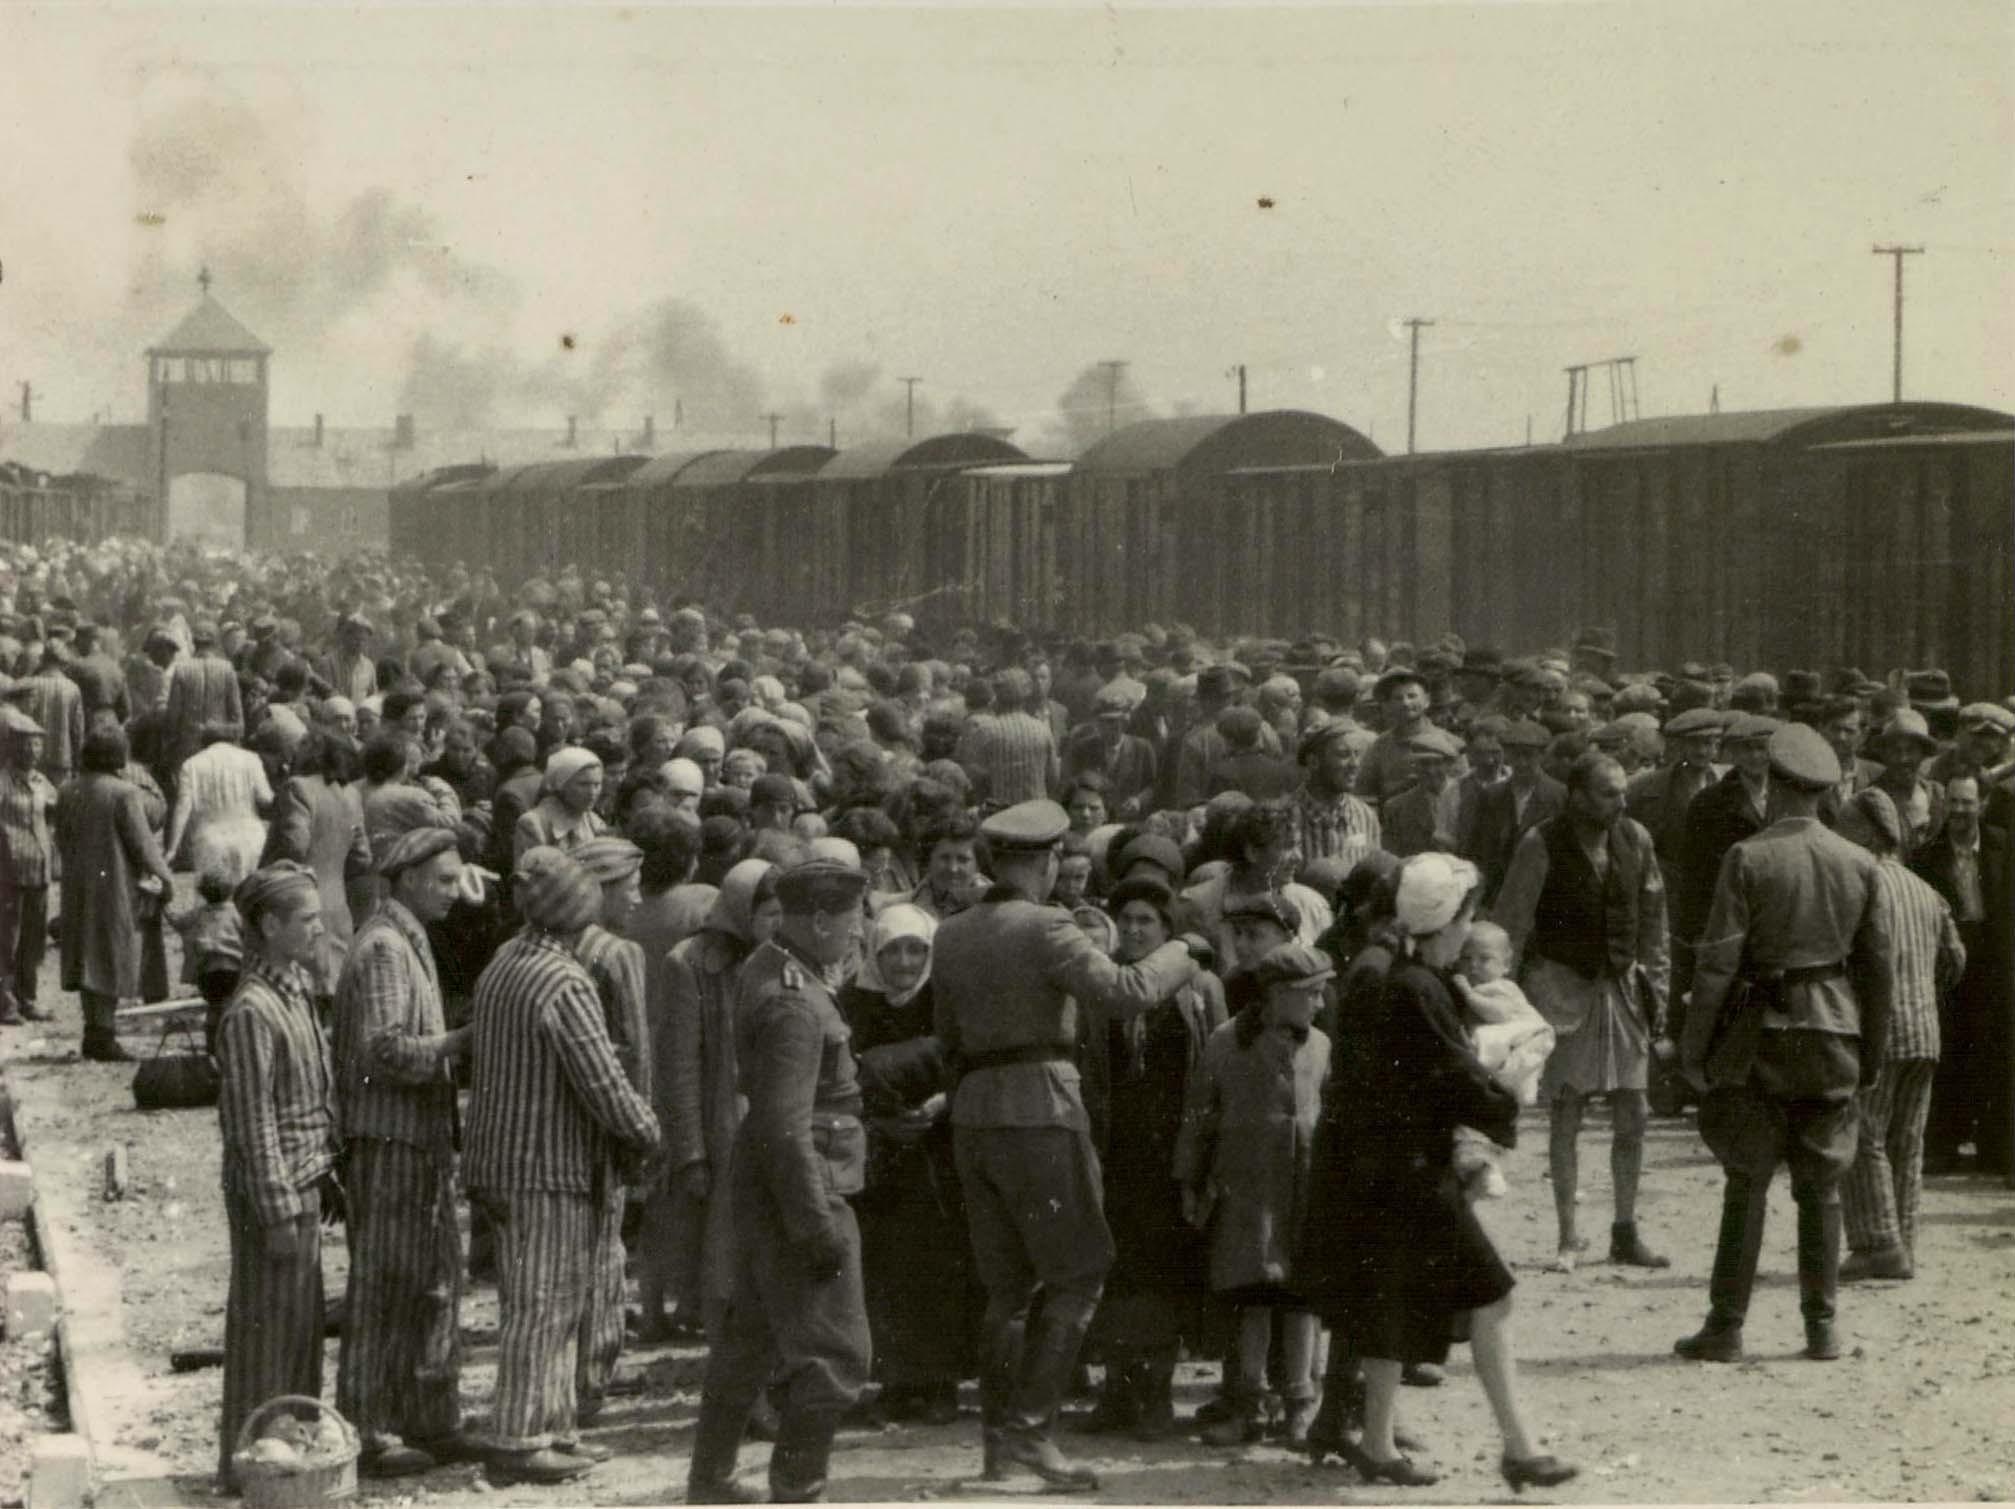 Mange norske jøder møtte tilintetgjørelsen i gasskamrene. Bildet viser en gruppe jøder fra Sentral-Europa ved ankomst  Auschwitz-Birkenau i mai 1944.